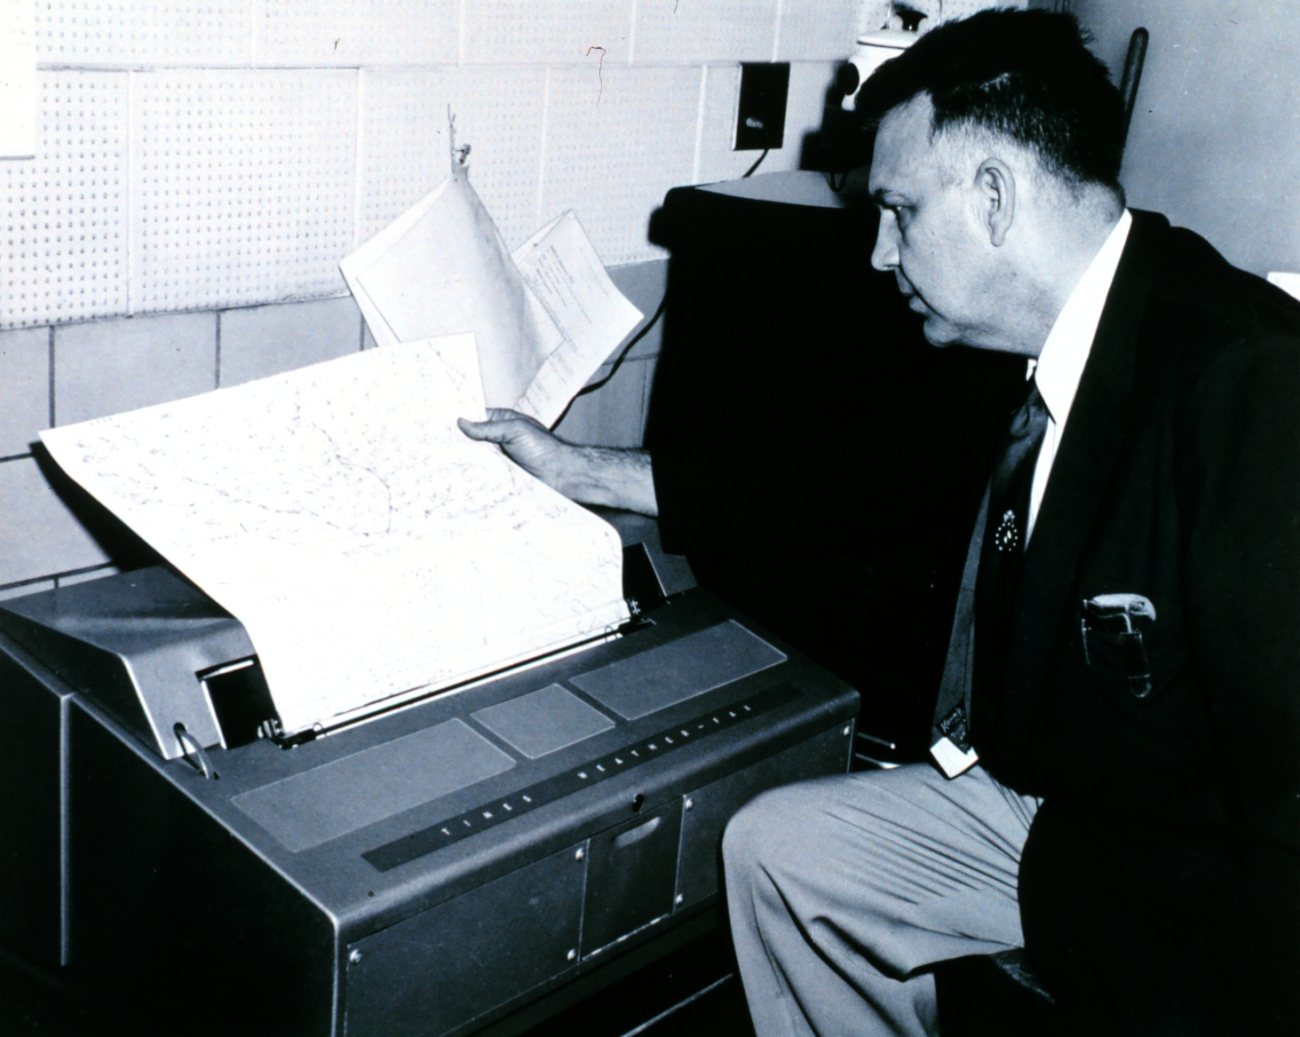 Weather Bureau meteorologist reading a weather map hot off the facscimilemachine